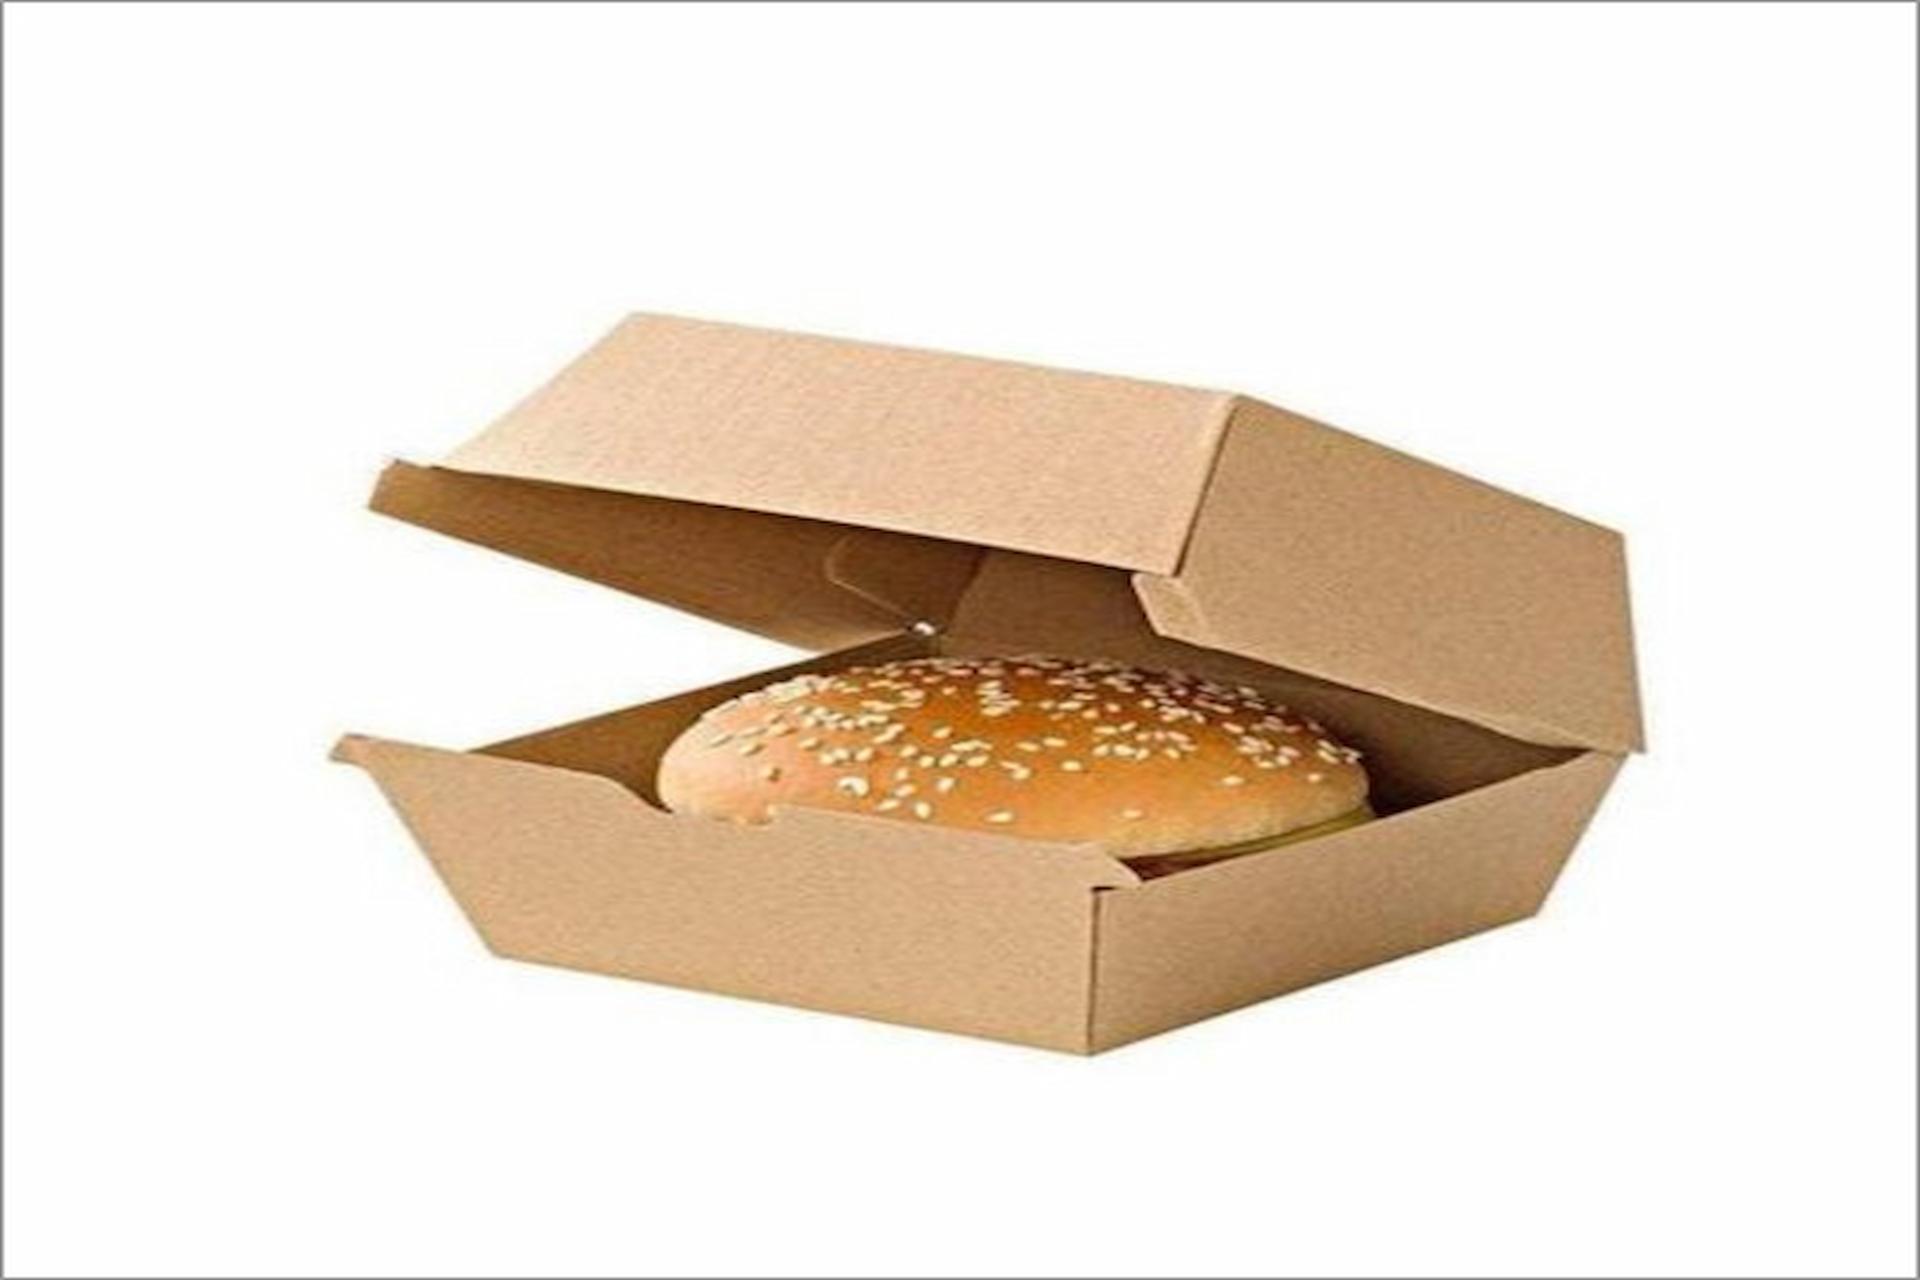 Design Matters: How Burger Box Packaging Enhances Branding and Customer Experience